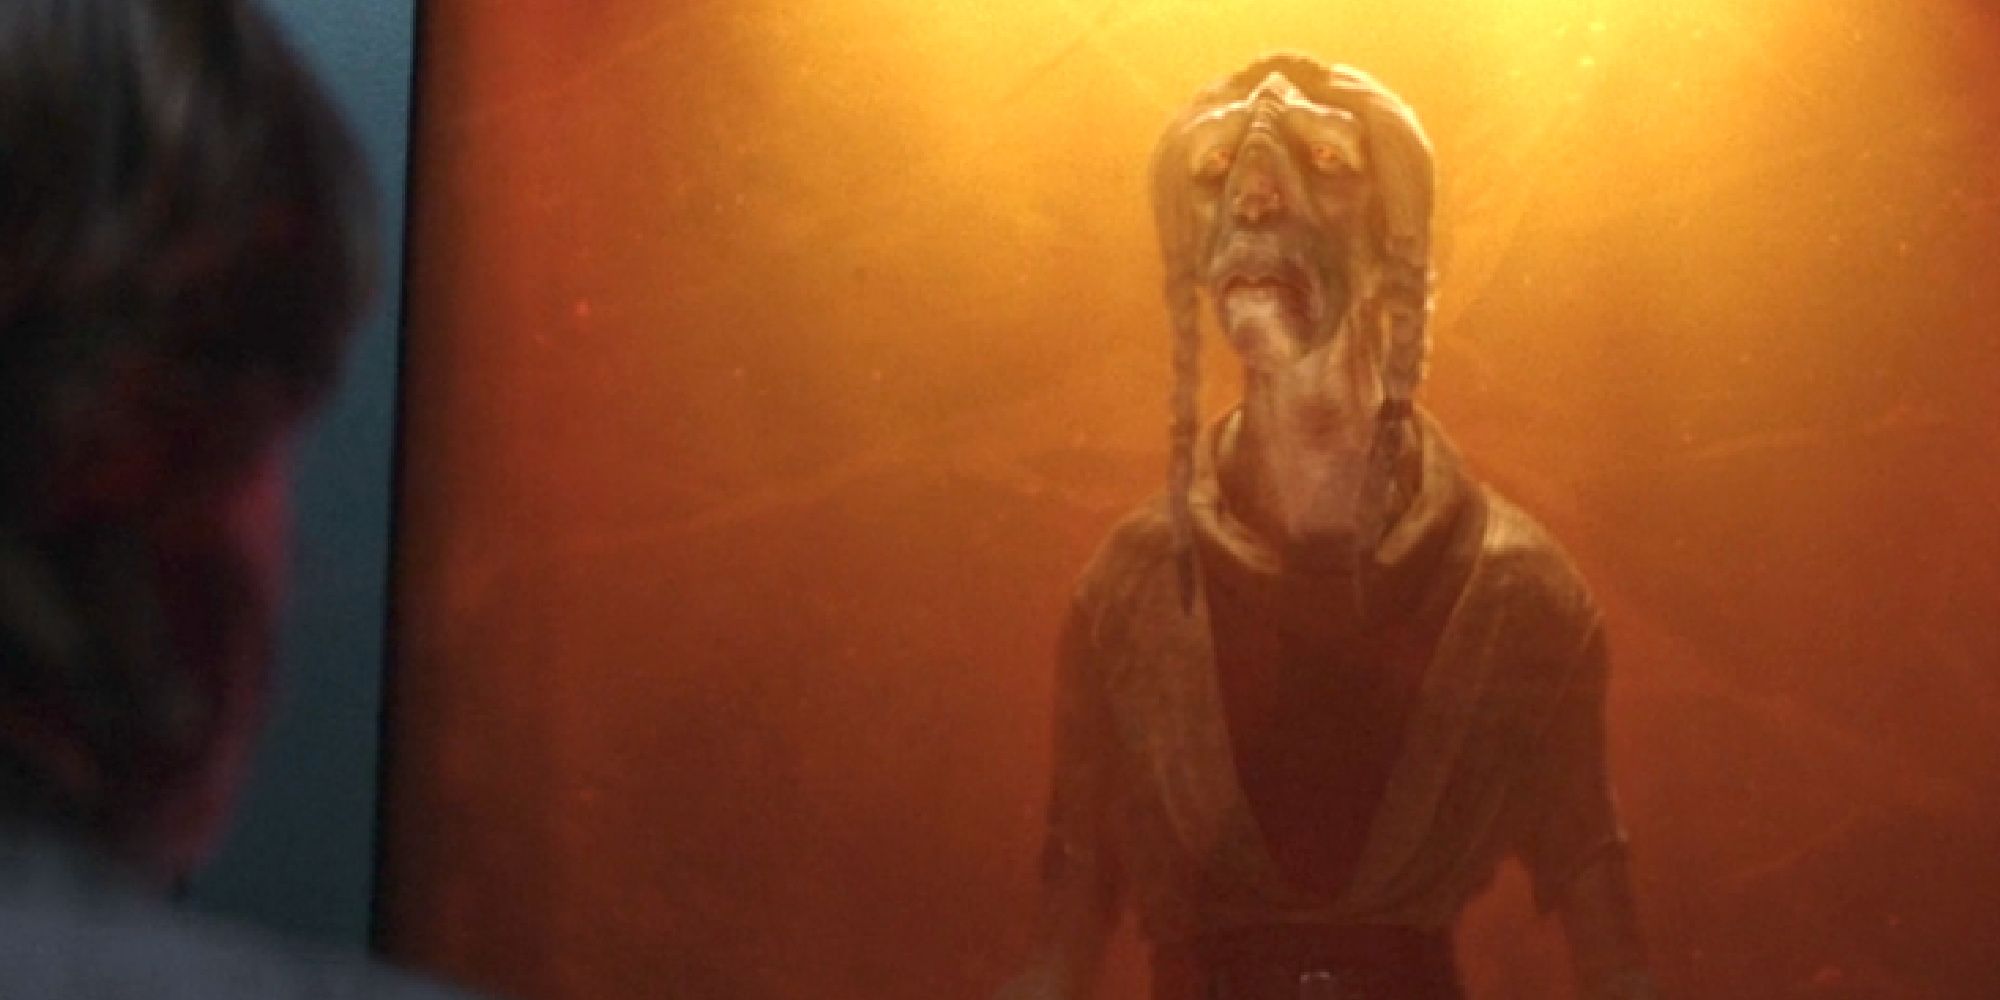 Tera Sinube appears in the Jedi tomb in Obi-Wan Kenobi.